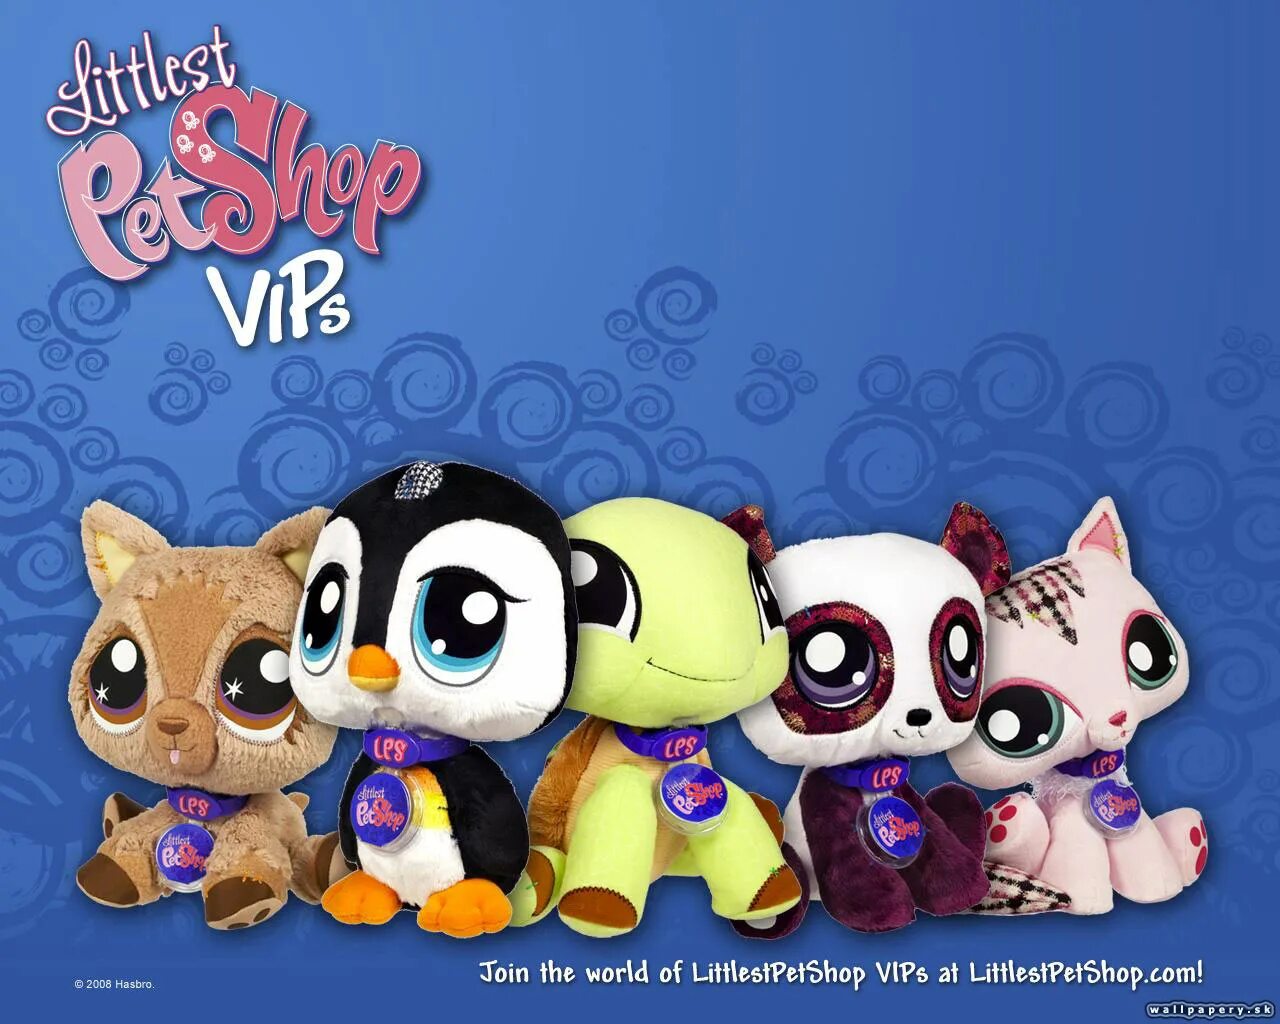 Little is Pet shop игра. My Littlest Pet shop игра. Littlest Pet shop 2010. Littlest Pet shop 2011. Игра лителес пет шоп